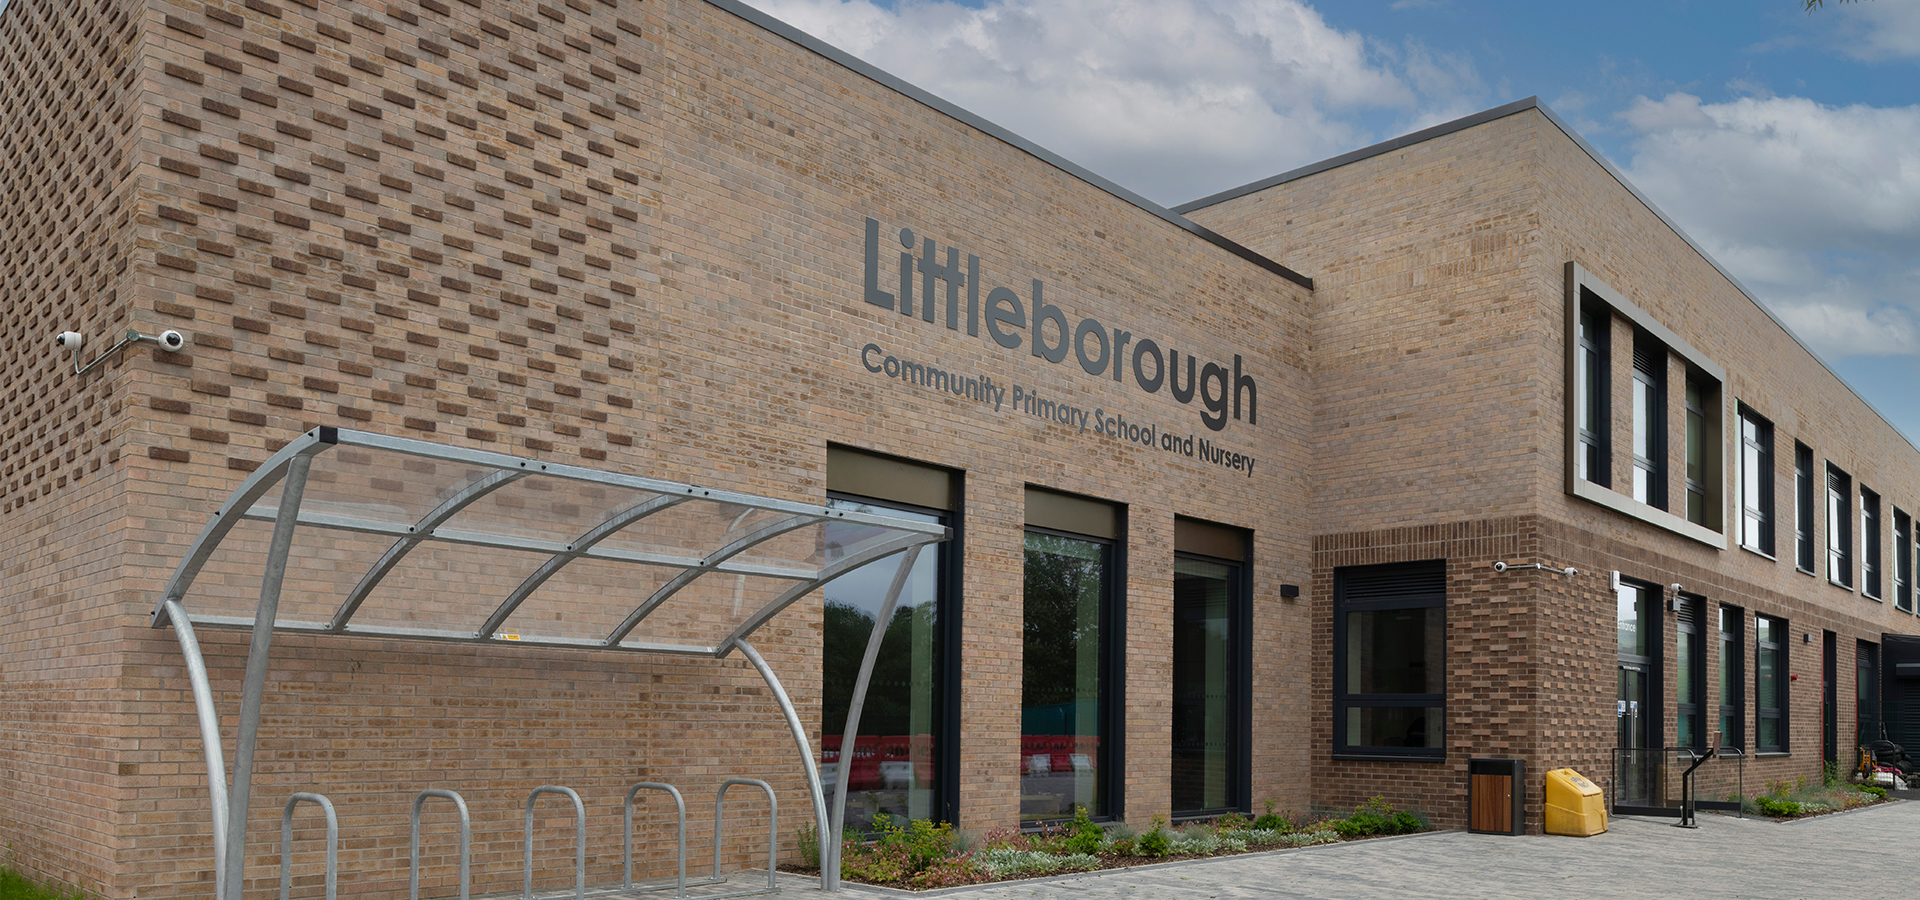 Littleborough Community Primary School and Nursery